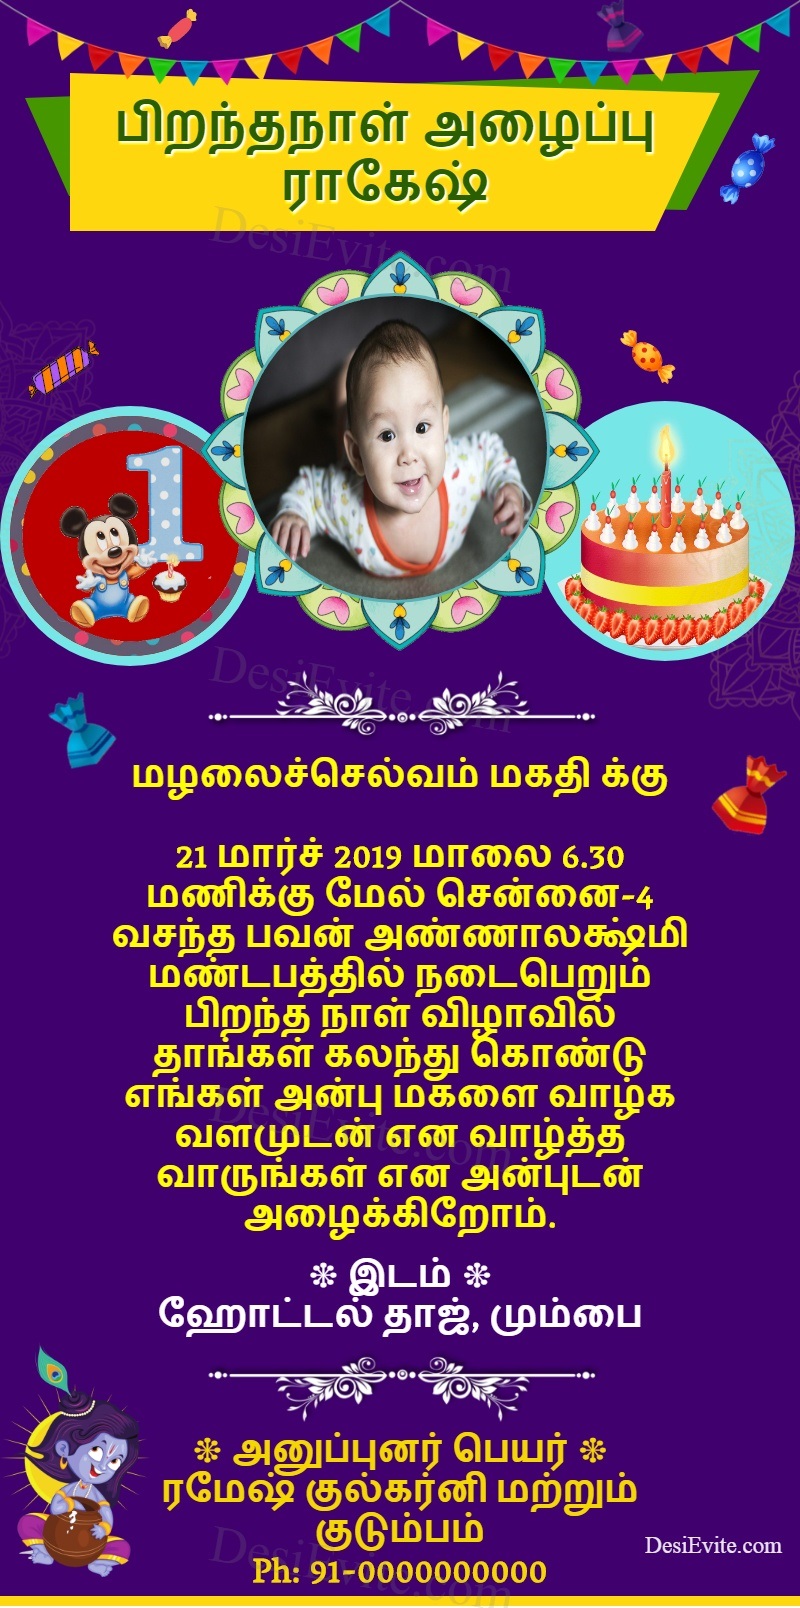 Tamil birthday invitation card in marathi with photo upload